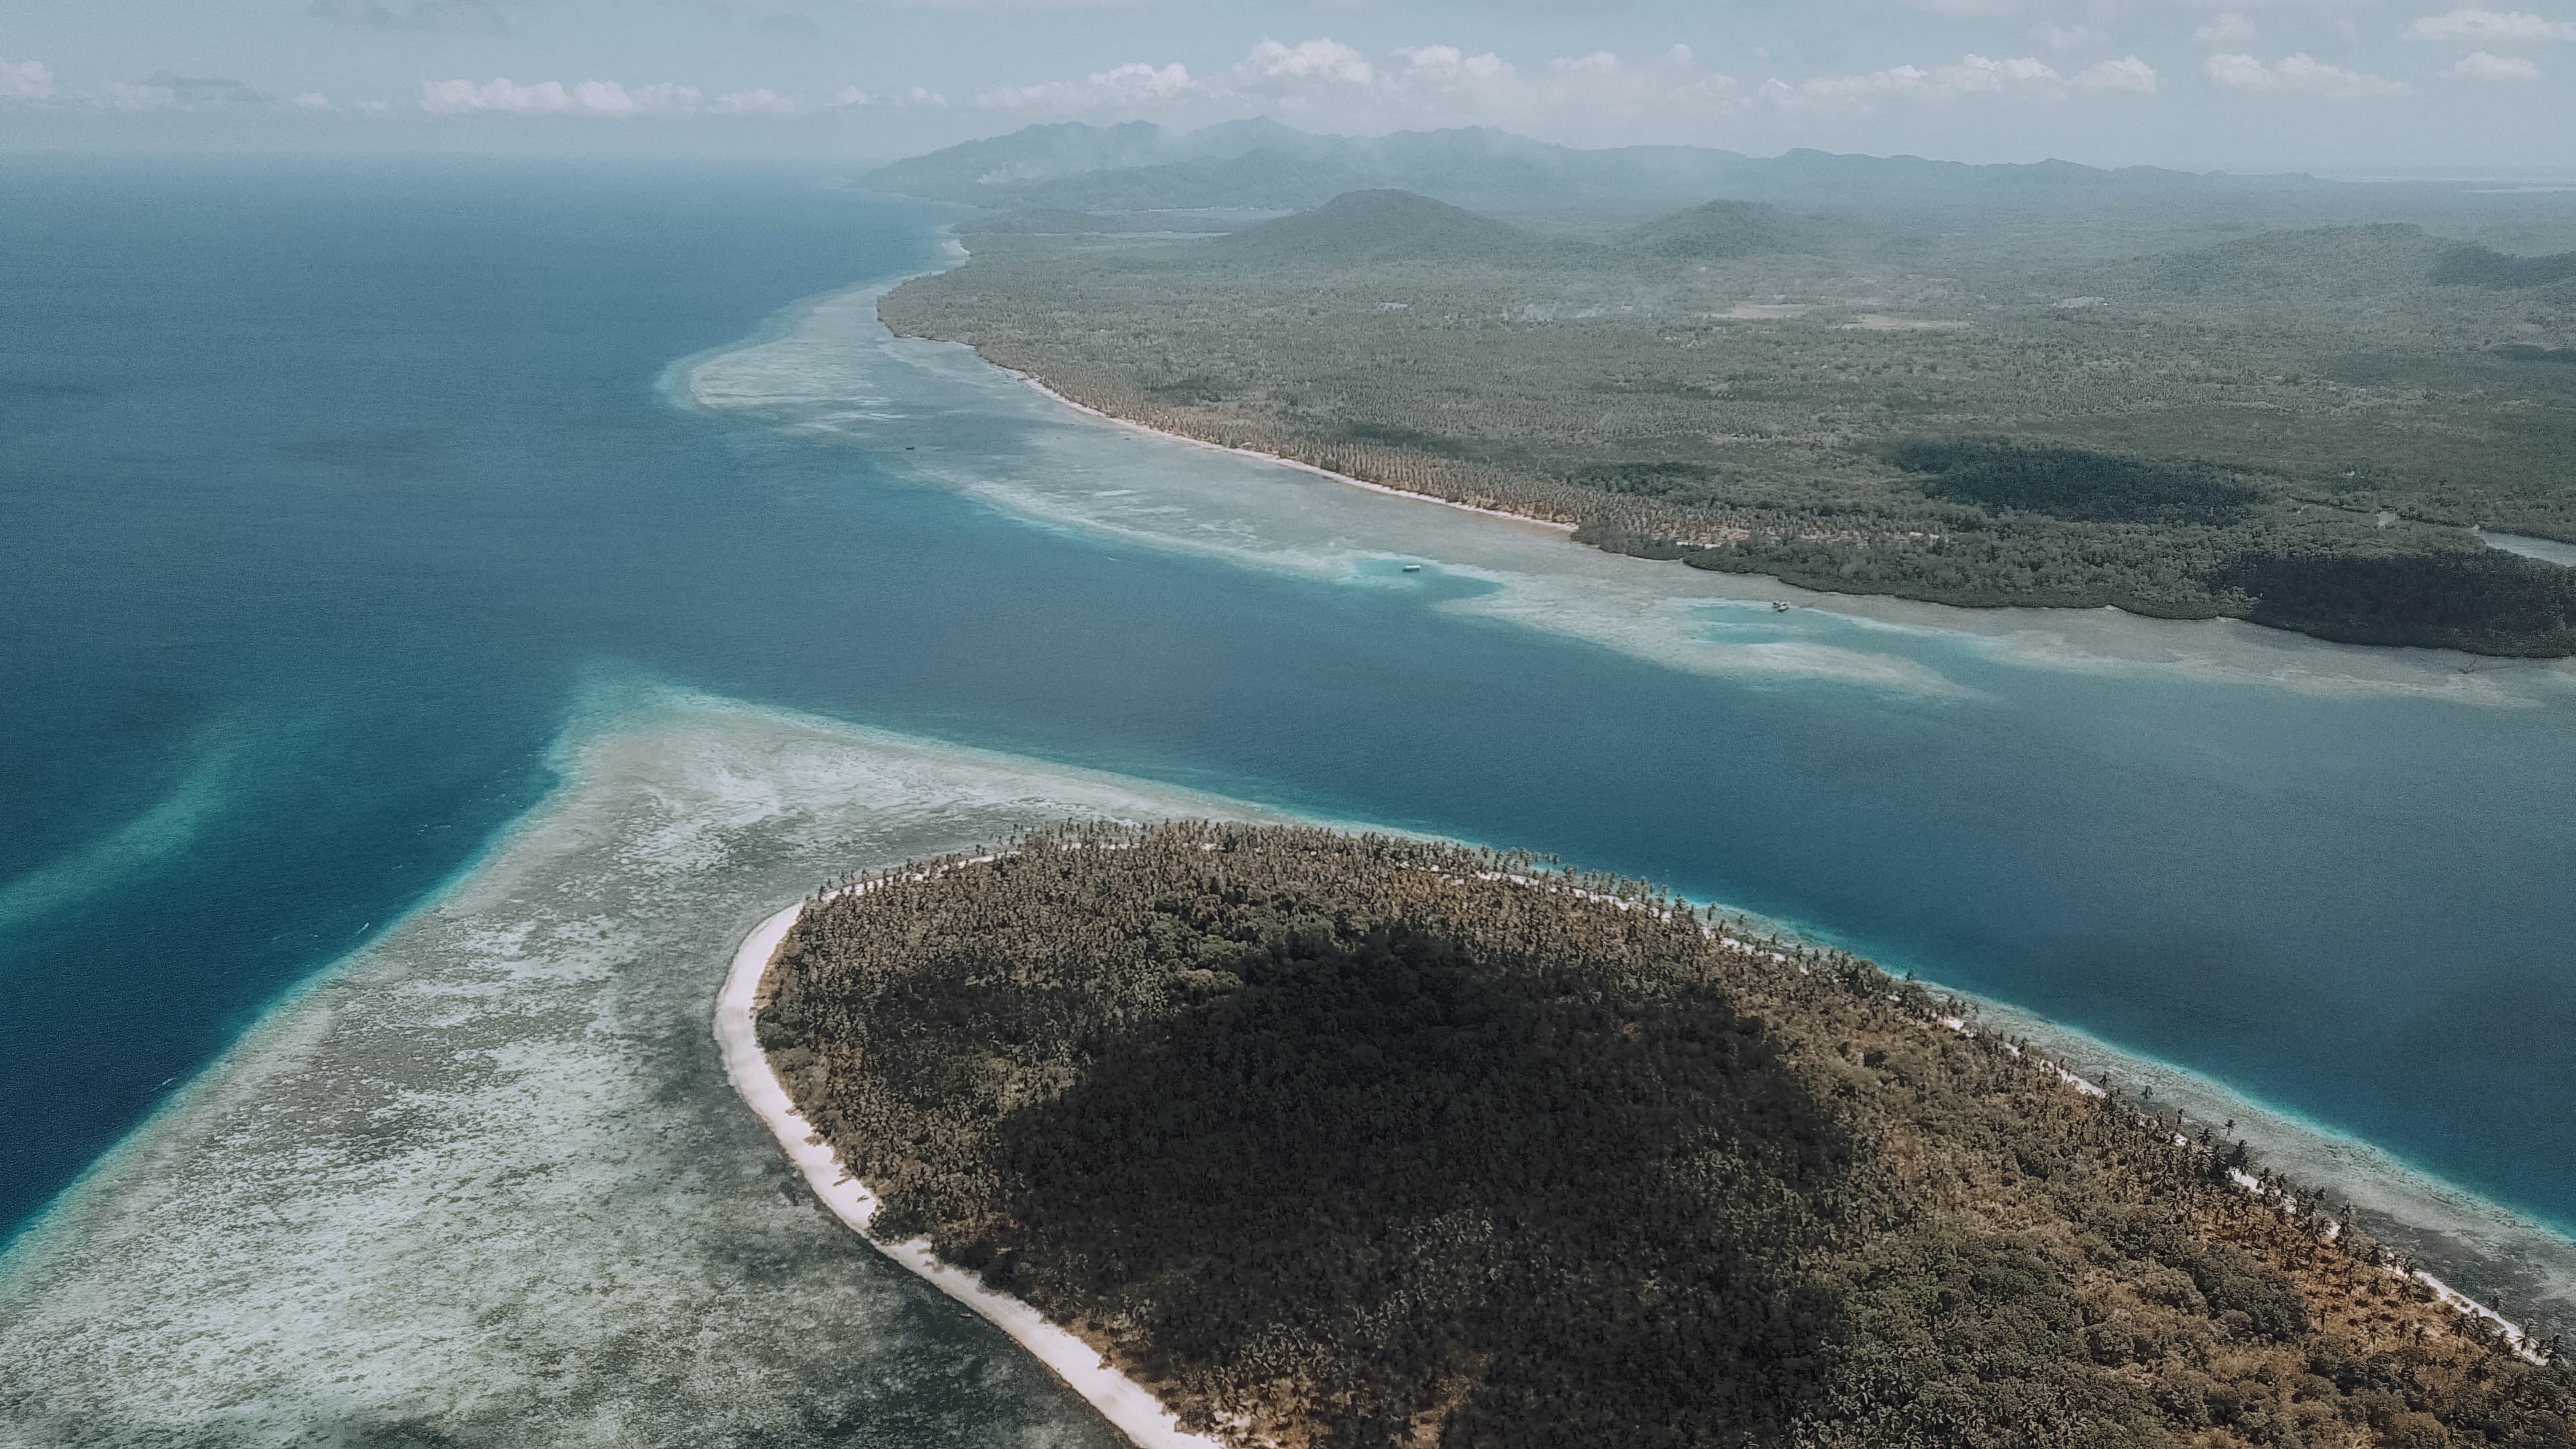 Balabac Philippines Siksikan Island drone